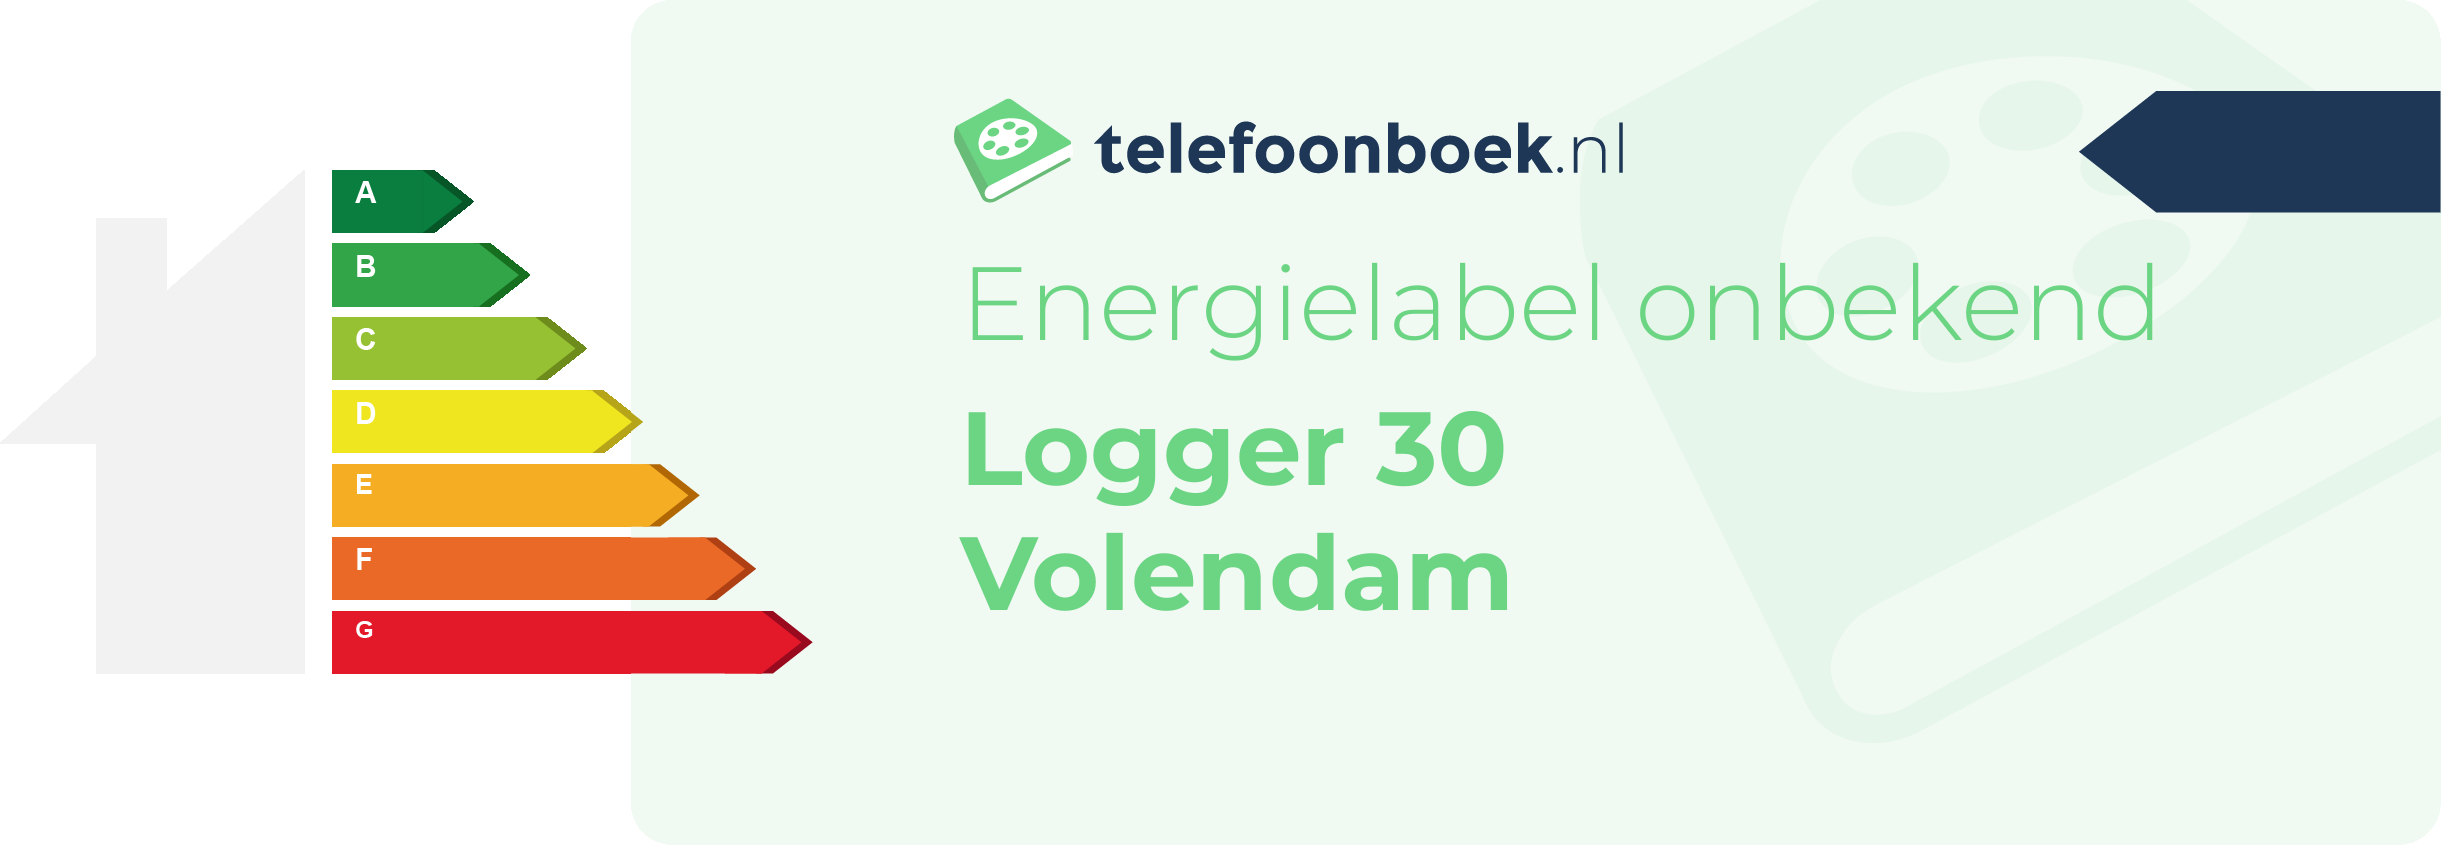 Energielabel Logger 30 Volendam